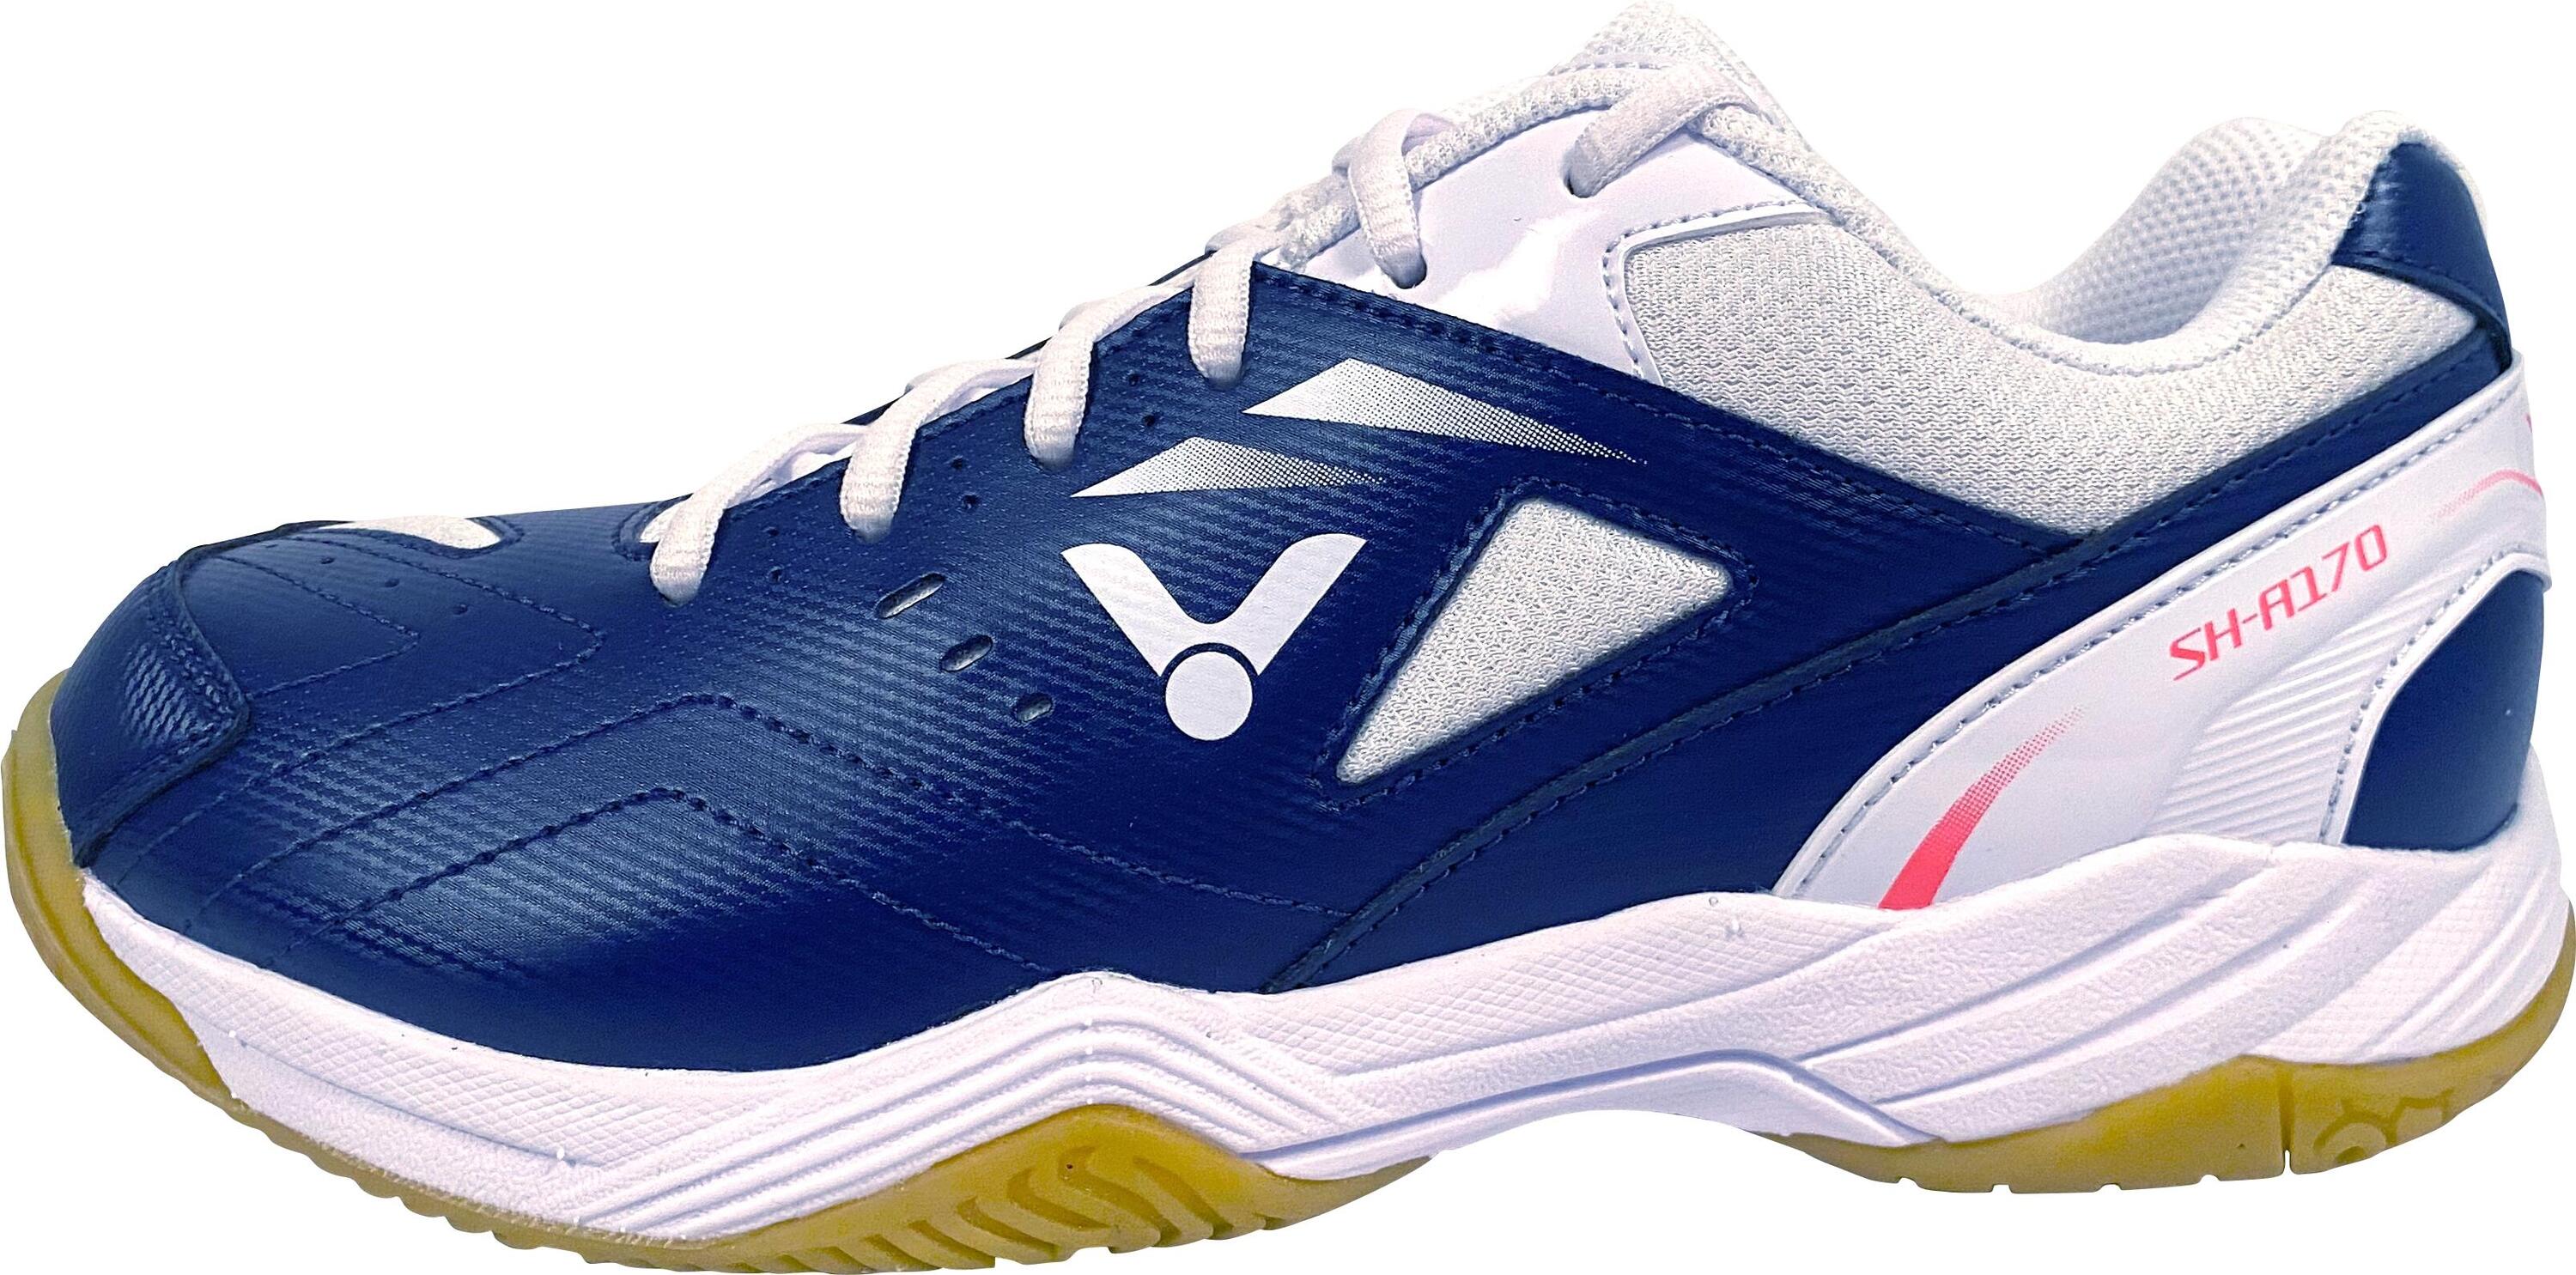 Victor A170 BA Badminton Shoes BLUE/WHITE 2/5